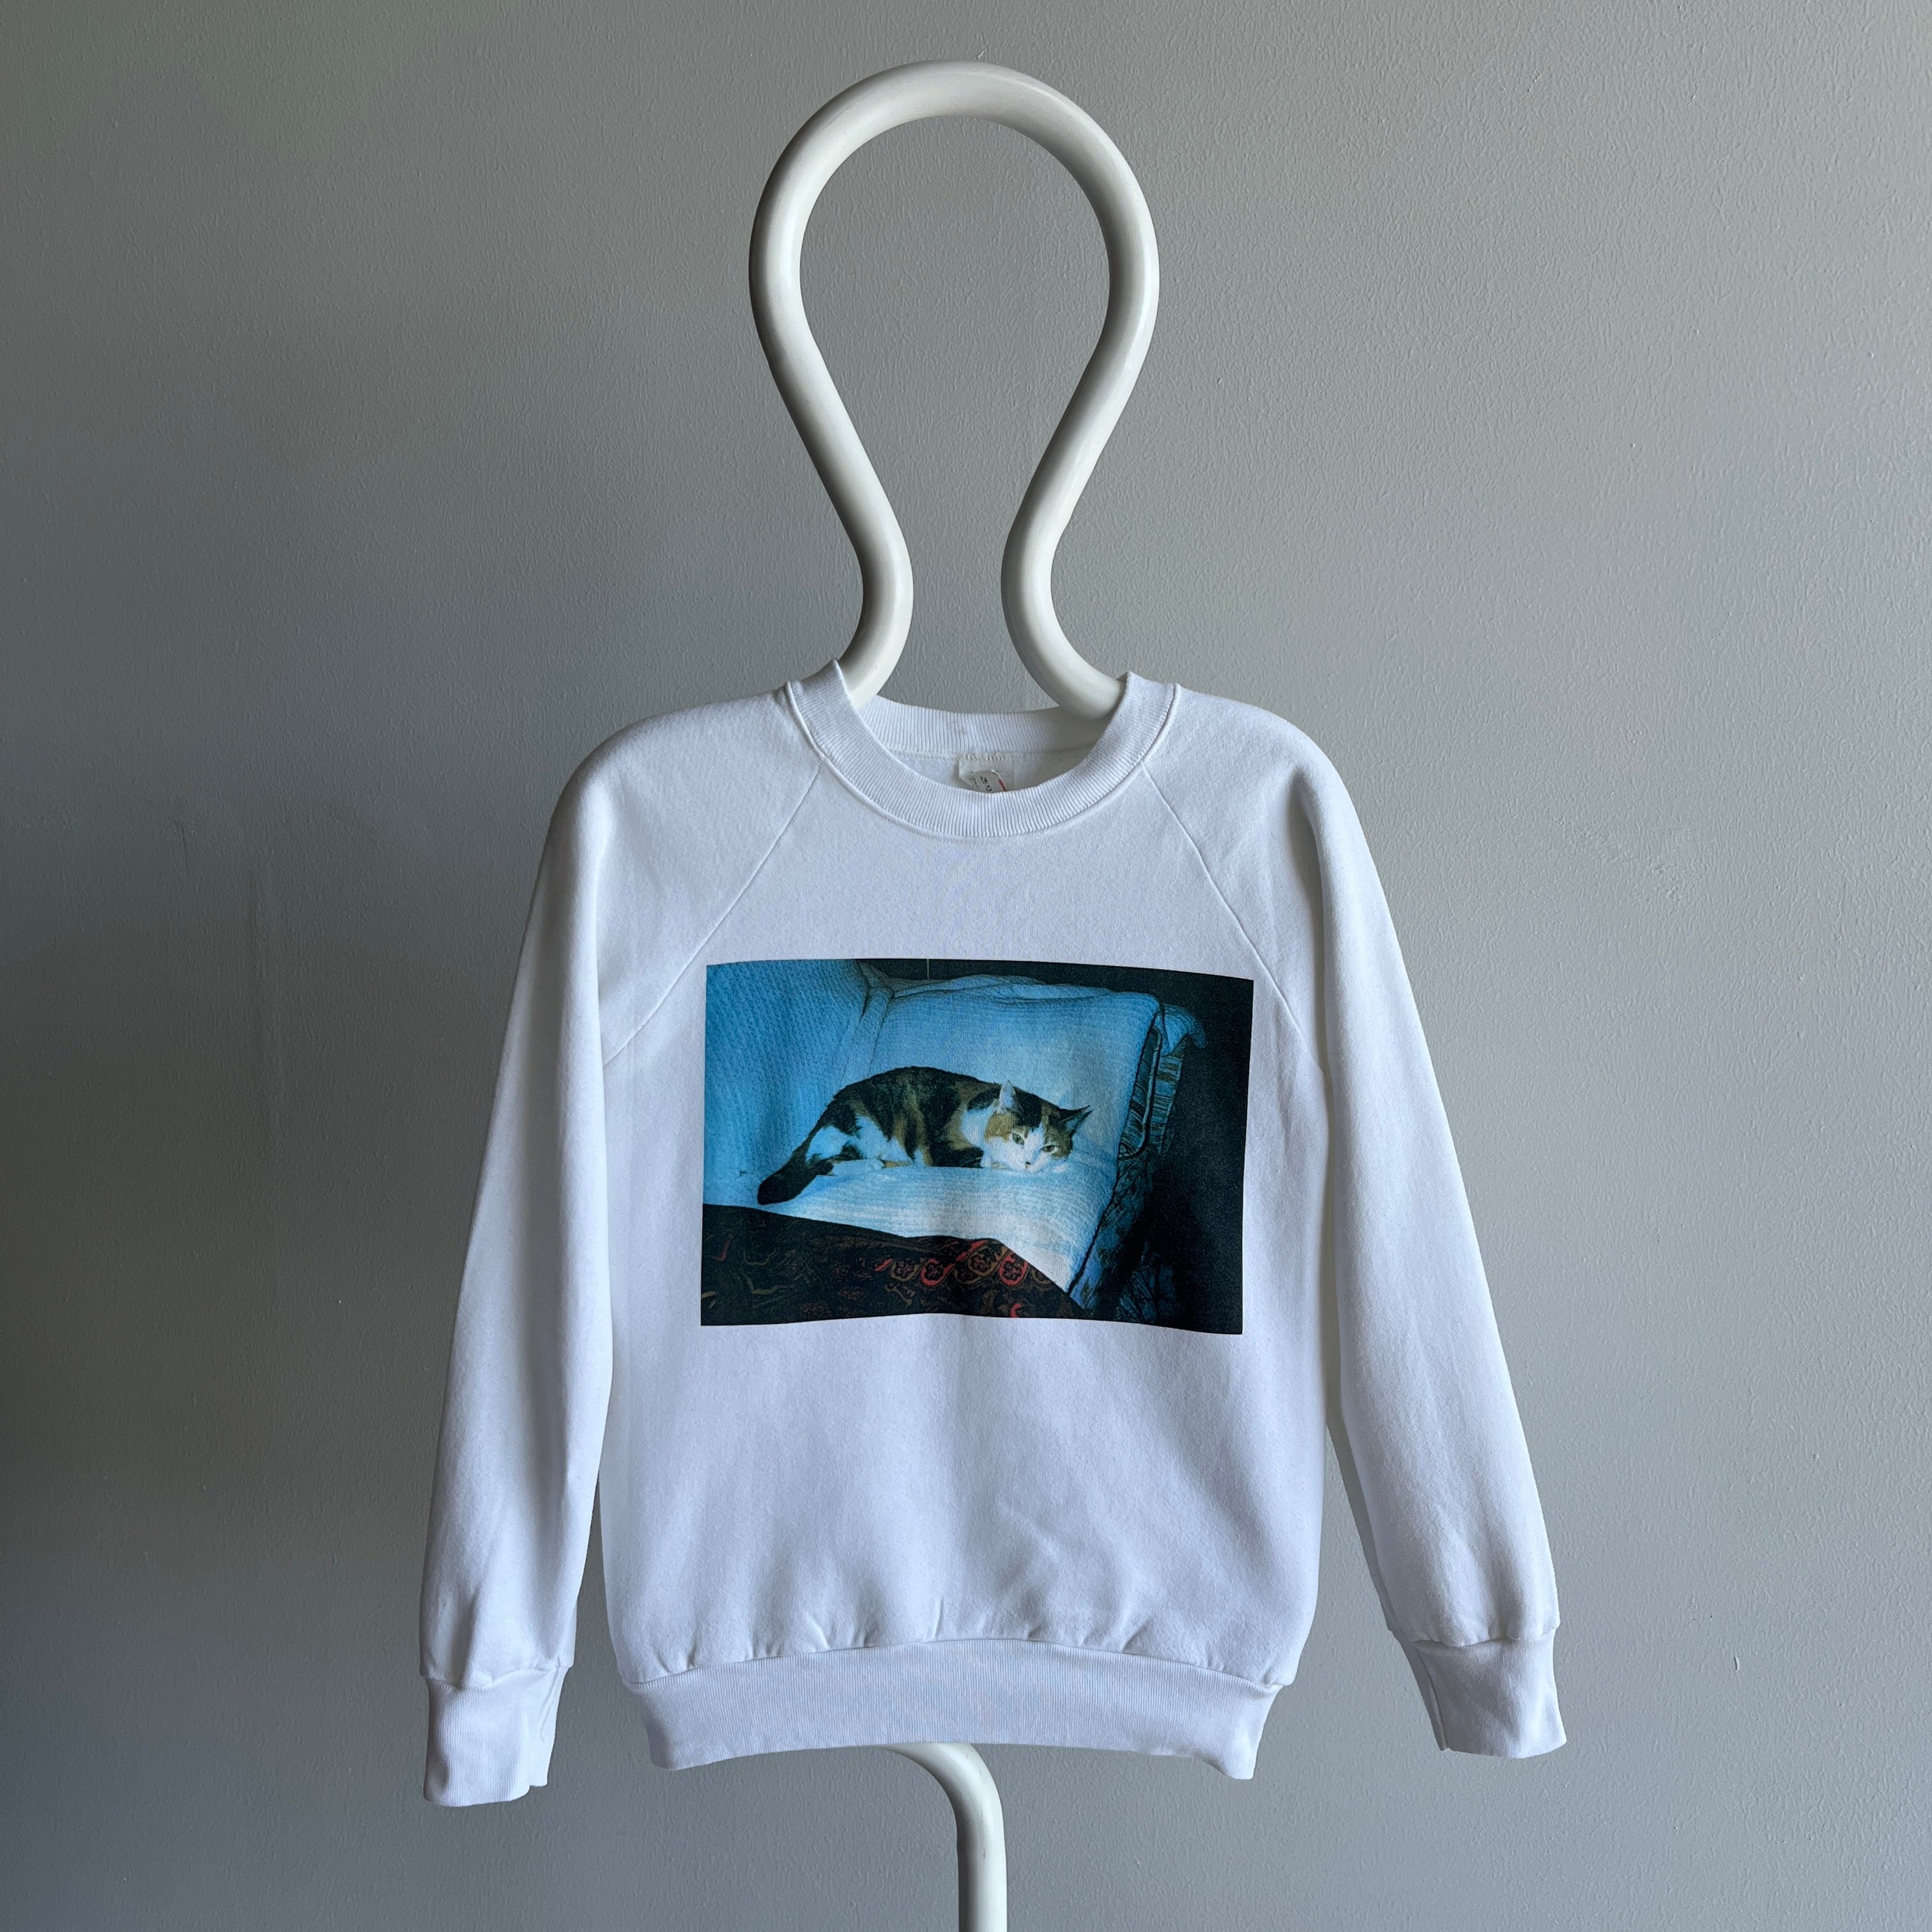 1980s A photo of someone's cat sweatshirt